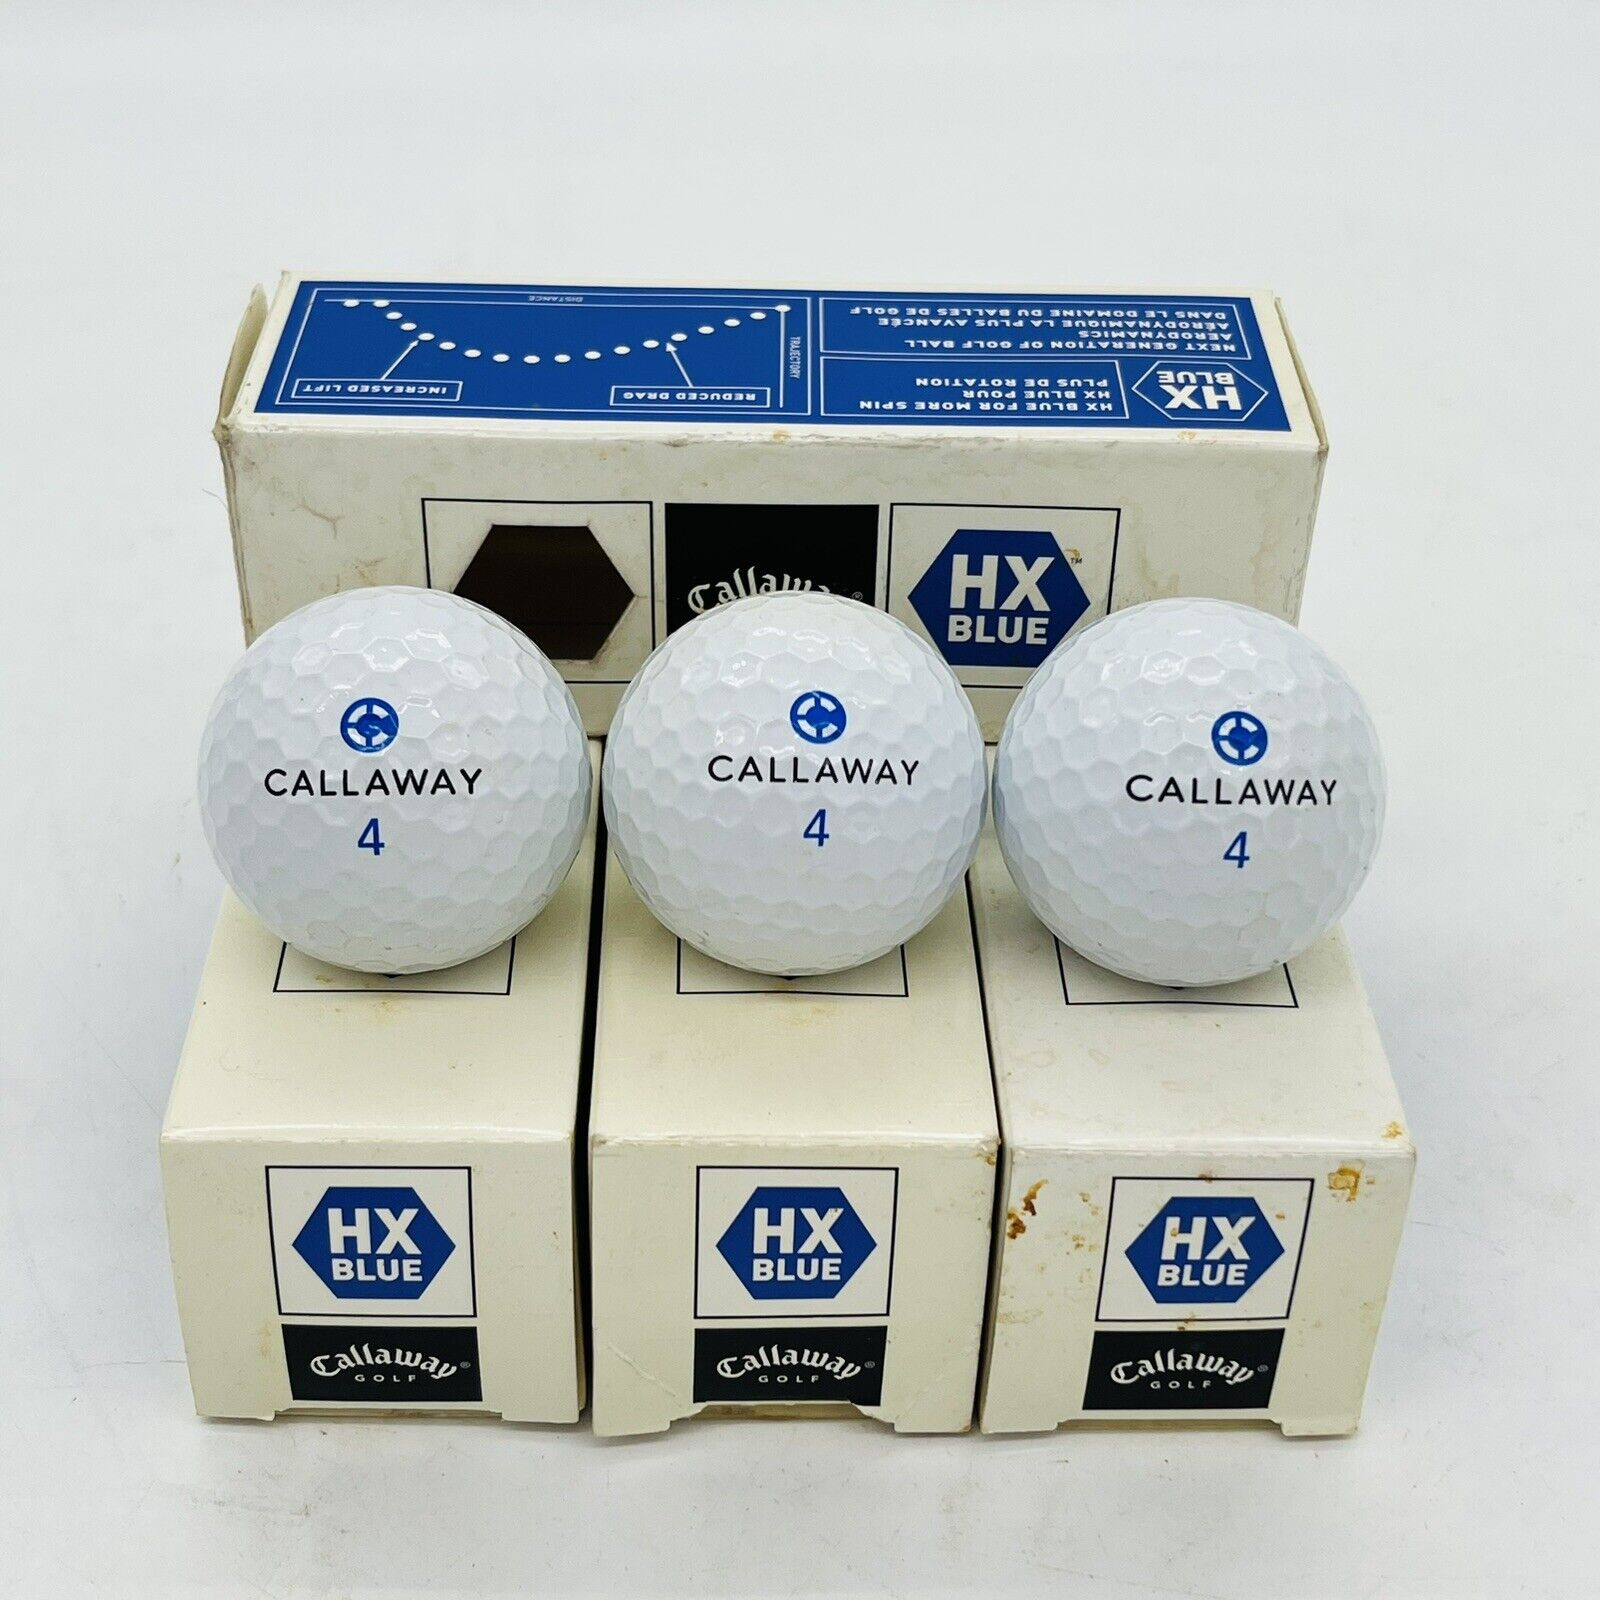 New Callaway Golf Balls HX Blue Case Of 12 Balls Solid Next Generation Of Balls